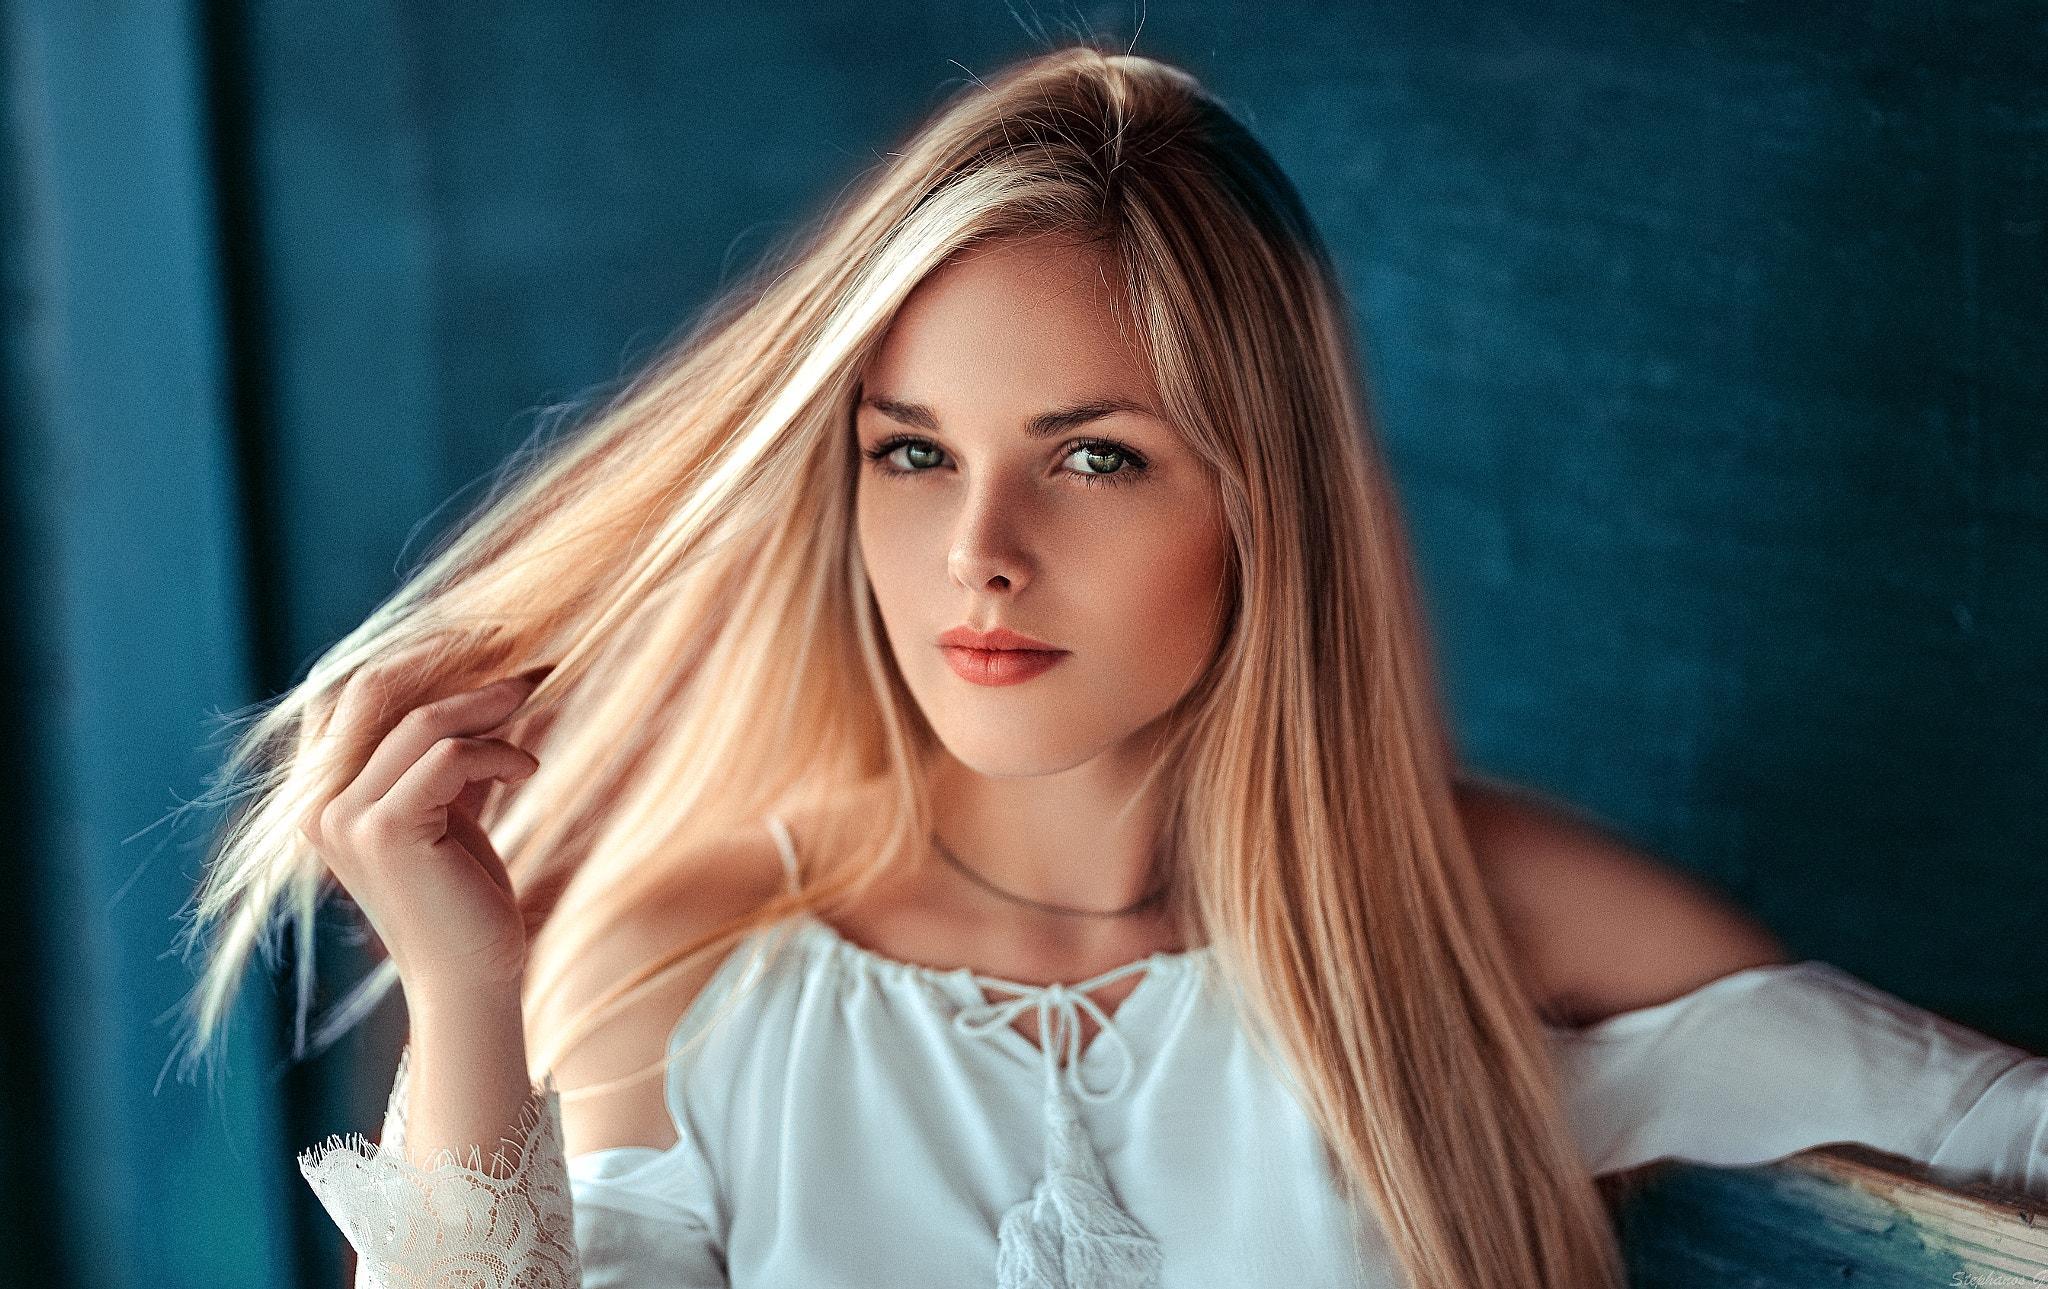 Blonde Hair Girl Wallpapers Top Free Blonde Hair Girl Backgrounds Wallpaperaccess